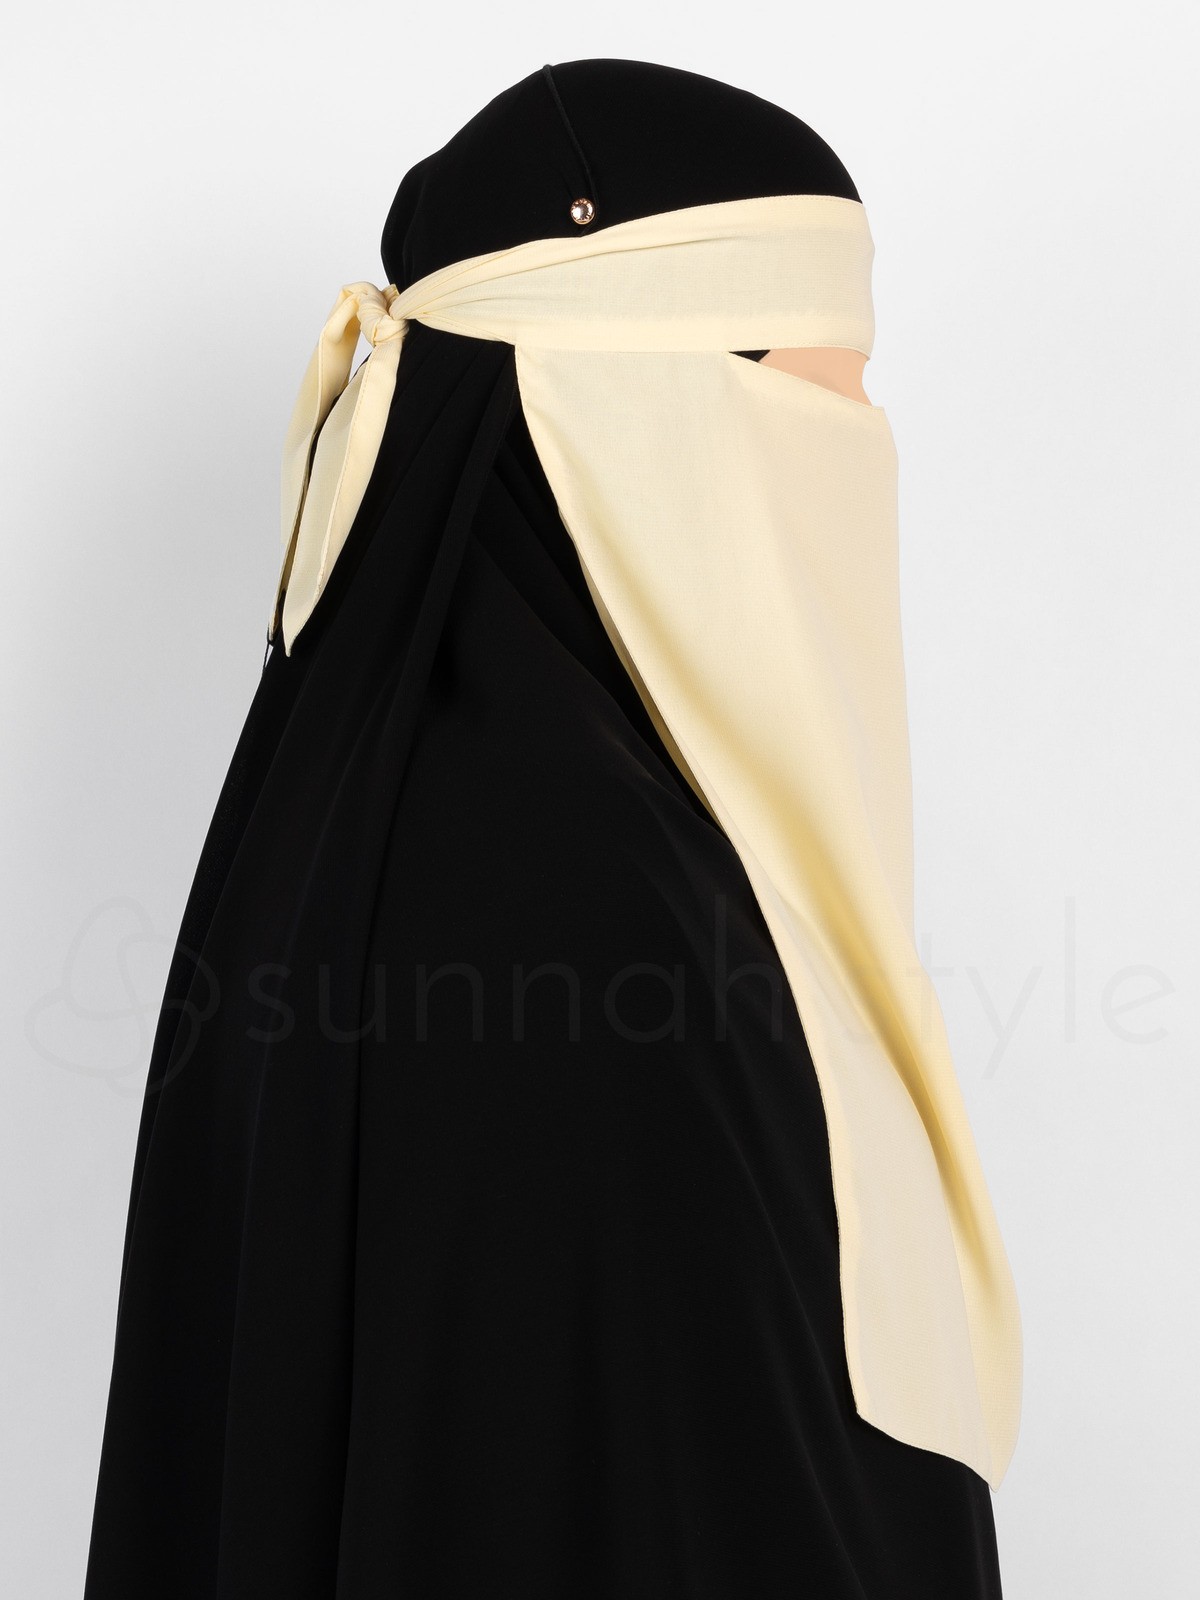 Sunnah Style - One Layer Niqab (Vanilla Cream)